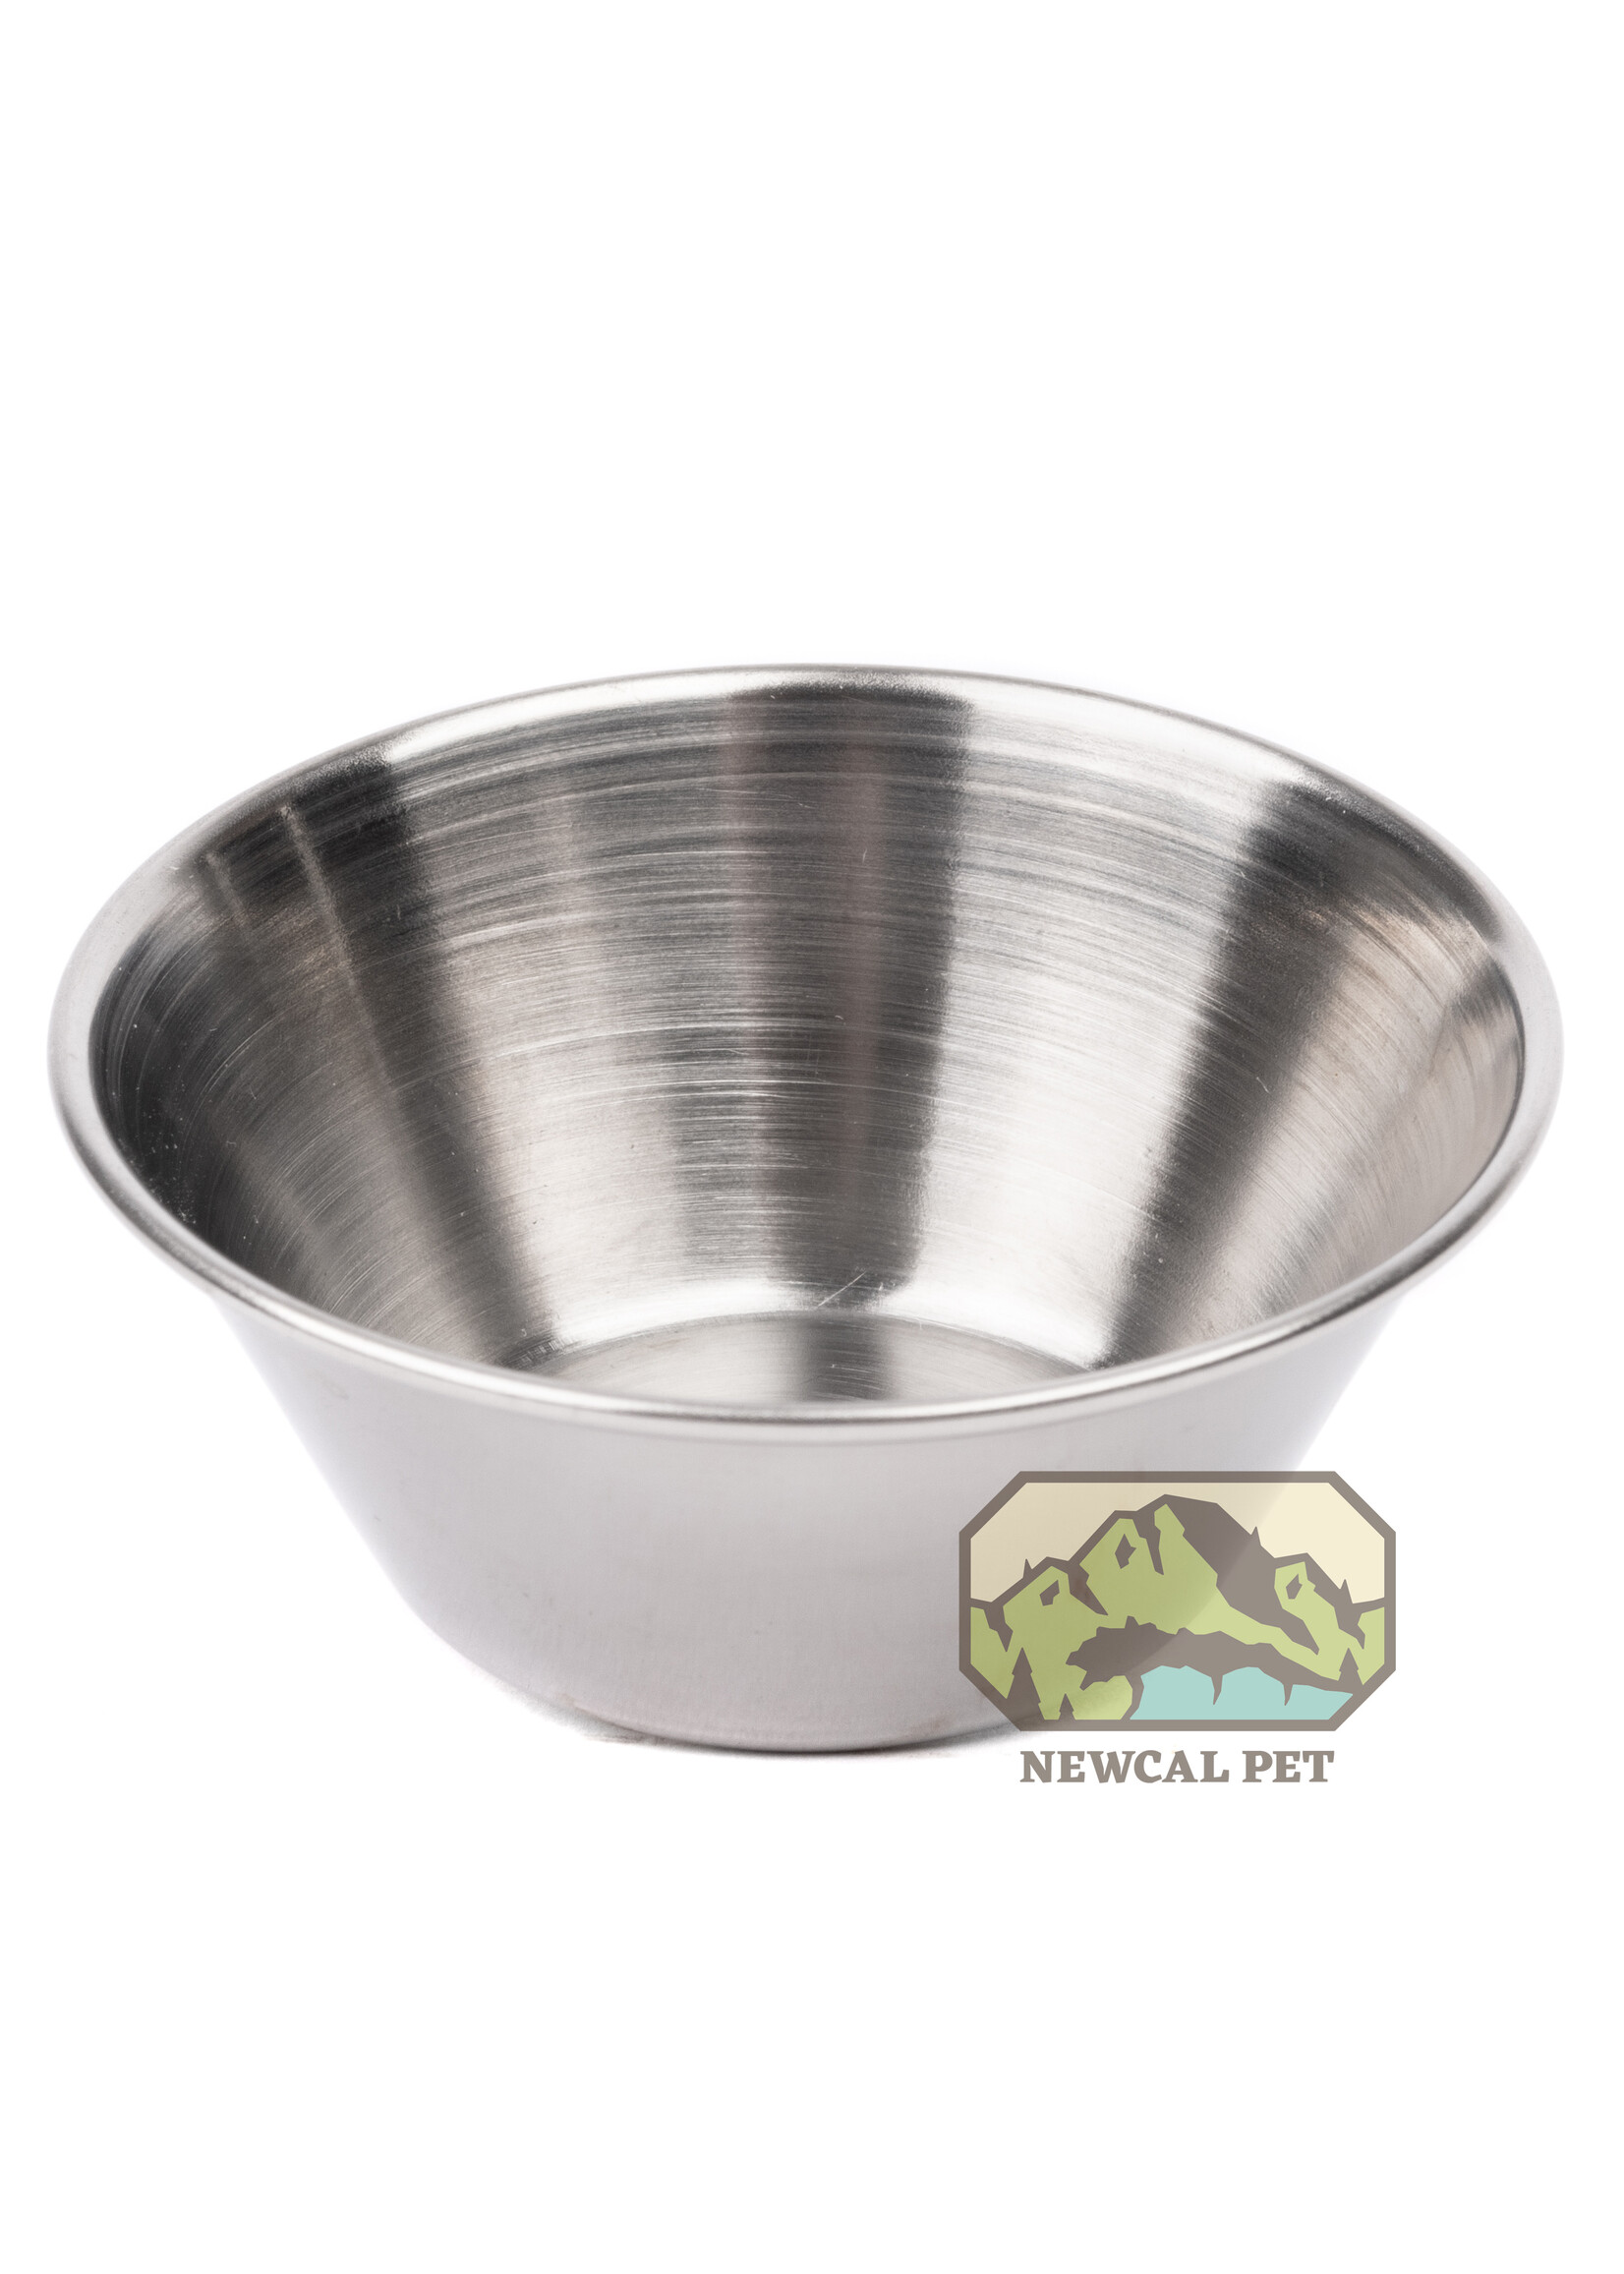 NewCal NewCal Stainless Steel Dish 1.5oz